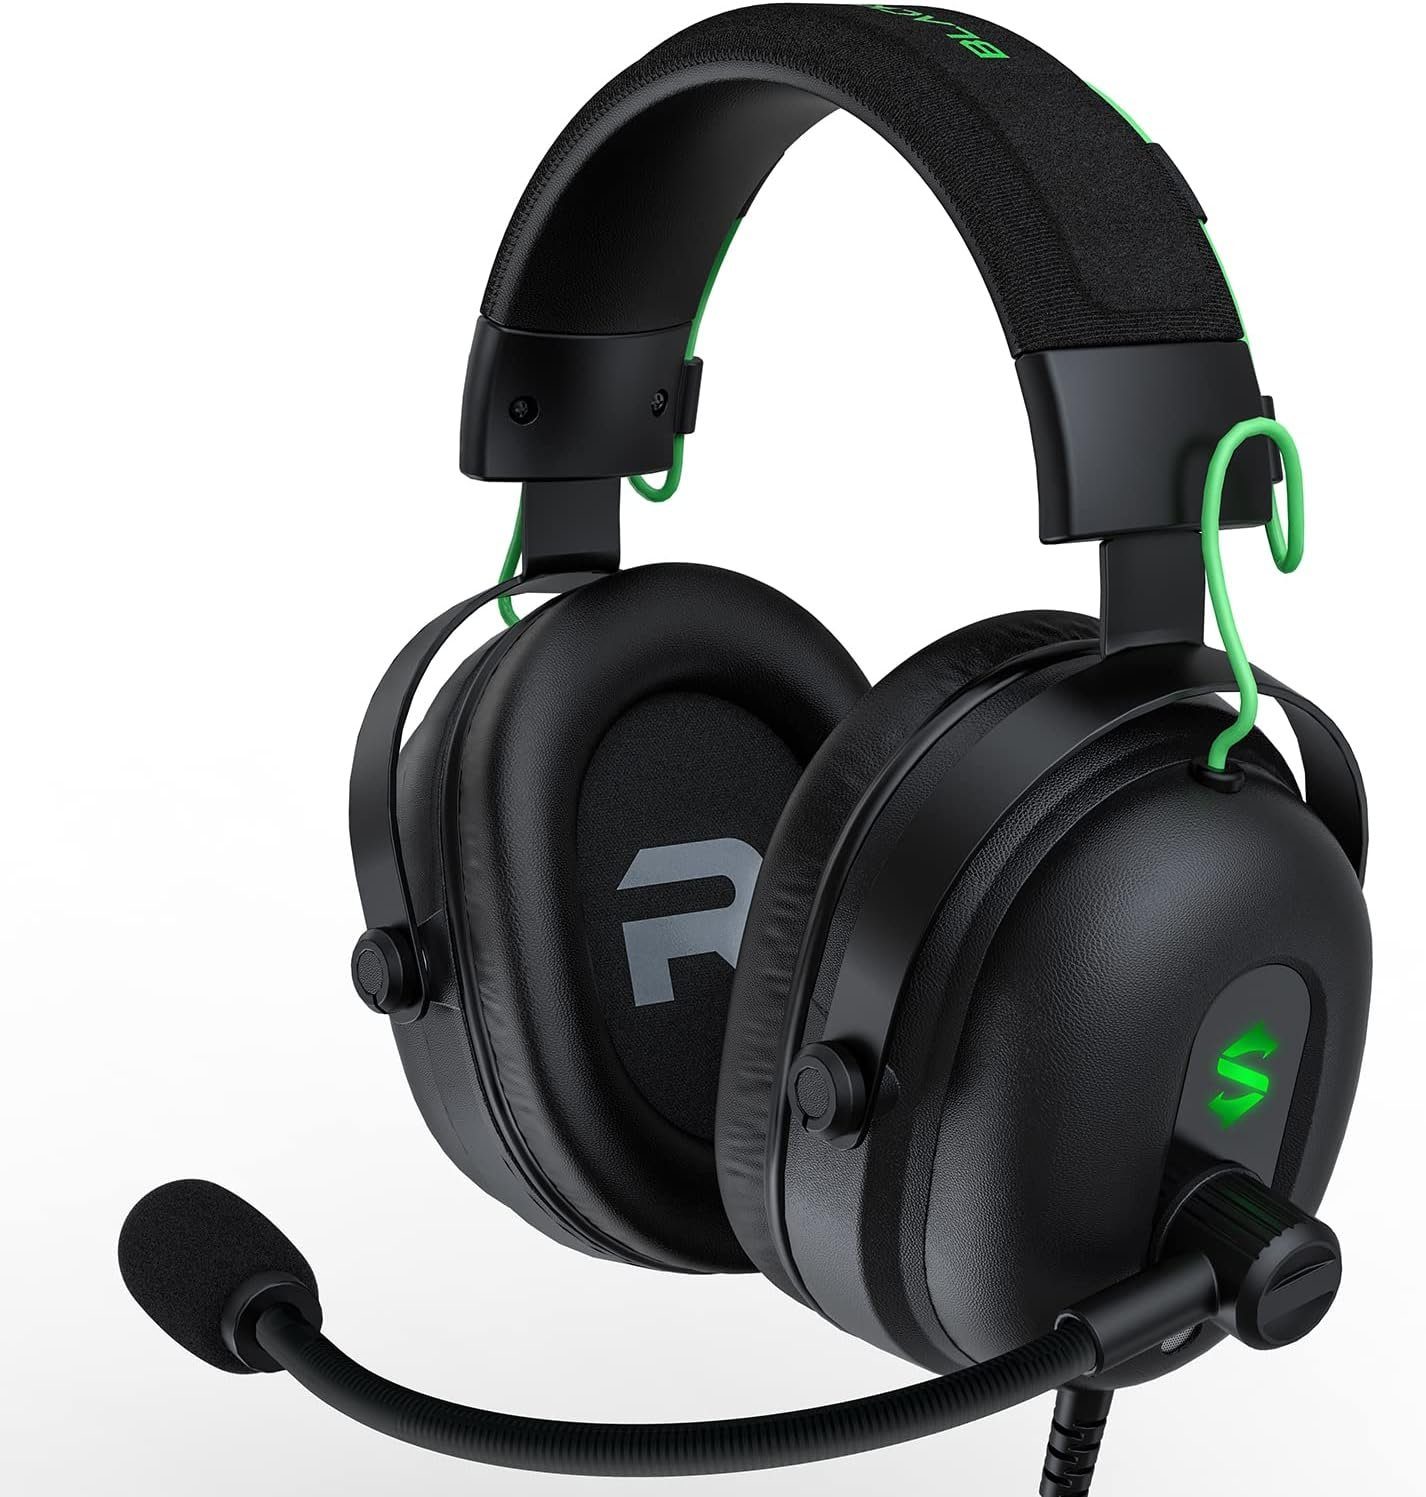 BS-X6 Gaming-Headset RGB-Beleuchtung. Tragekomfort., Sound) und mit Gaming-Headset Gaming-Headset klarem Shark Top-Mikrofon mit und (Kabelloses Hoher 7.1 Surround-Sound Black